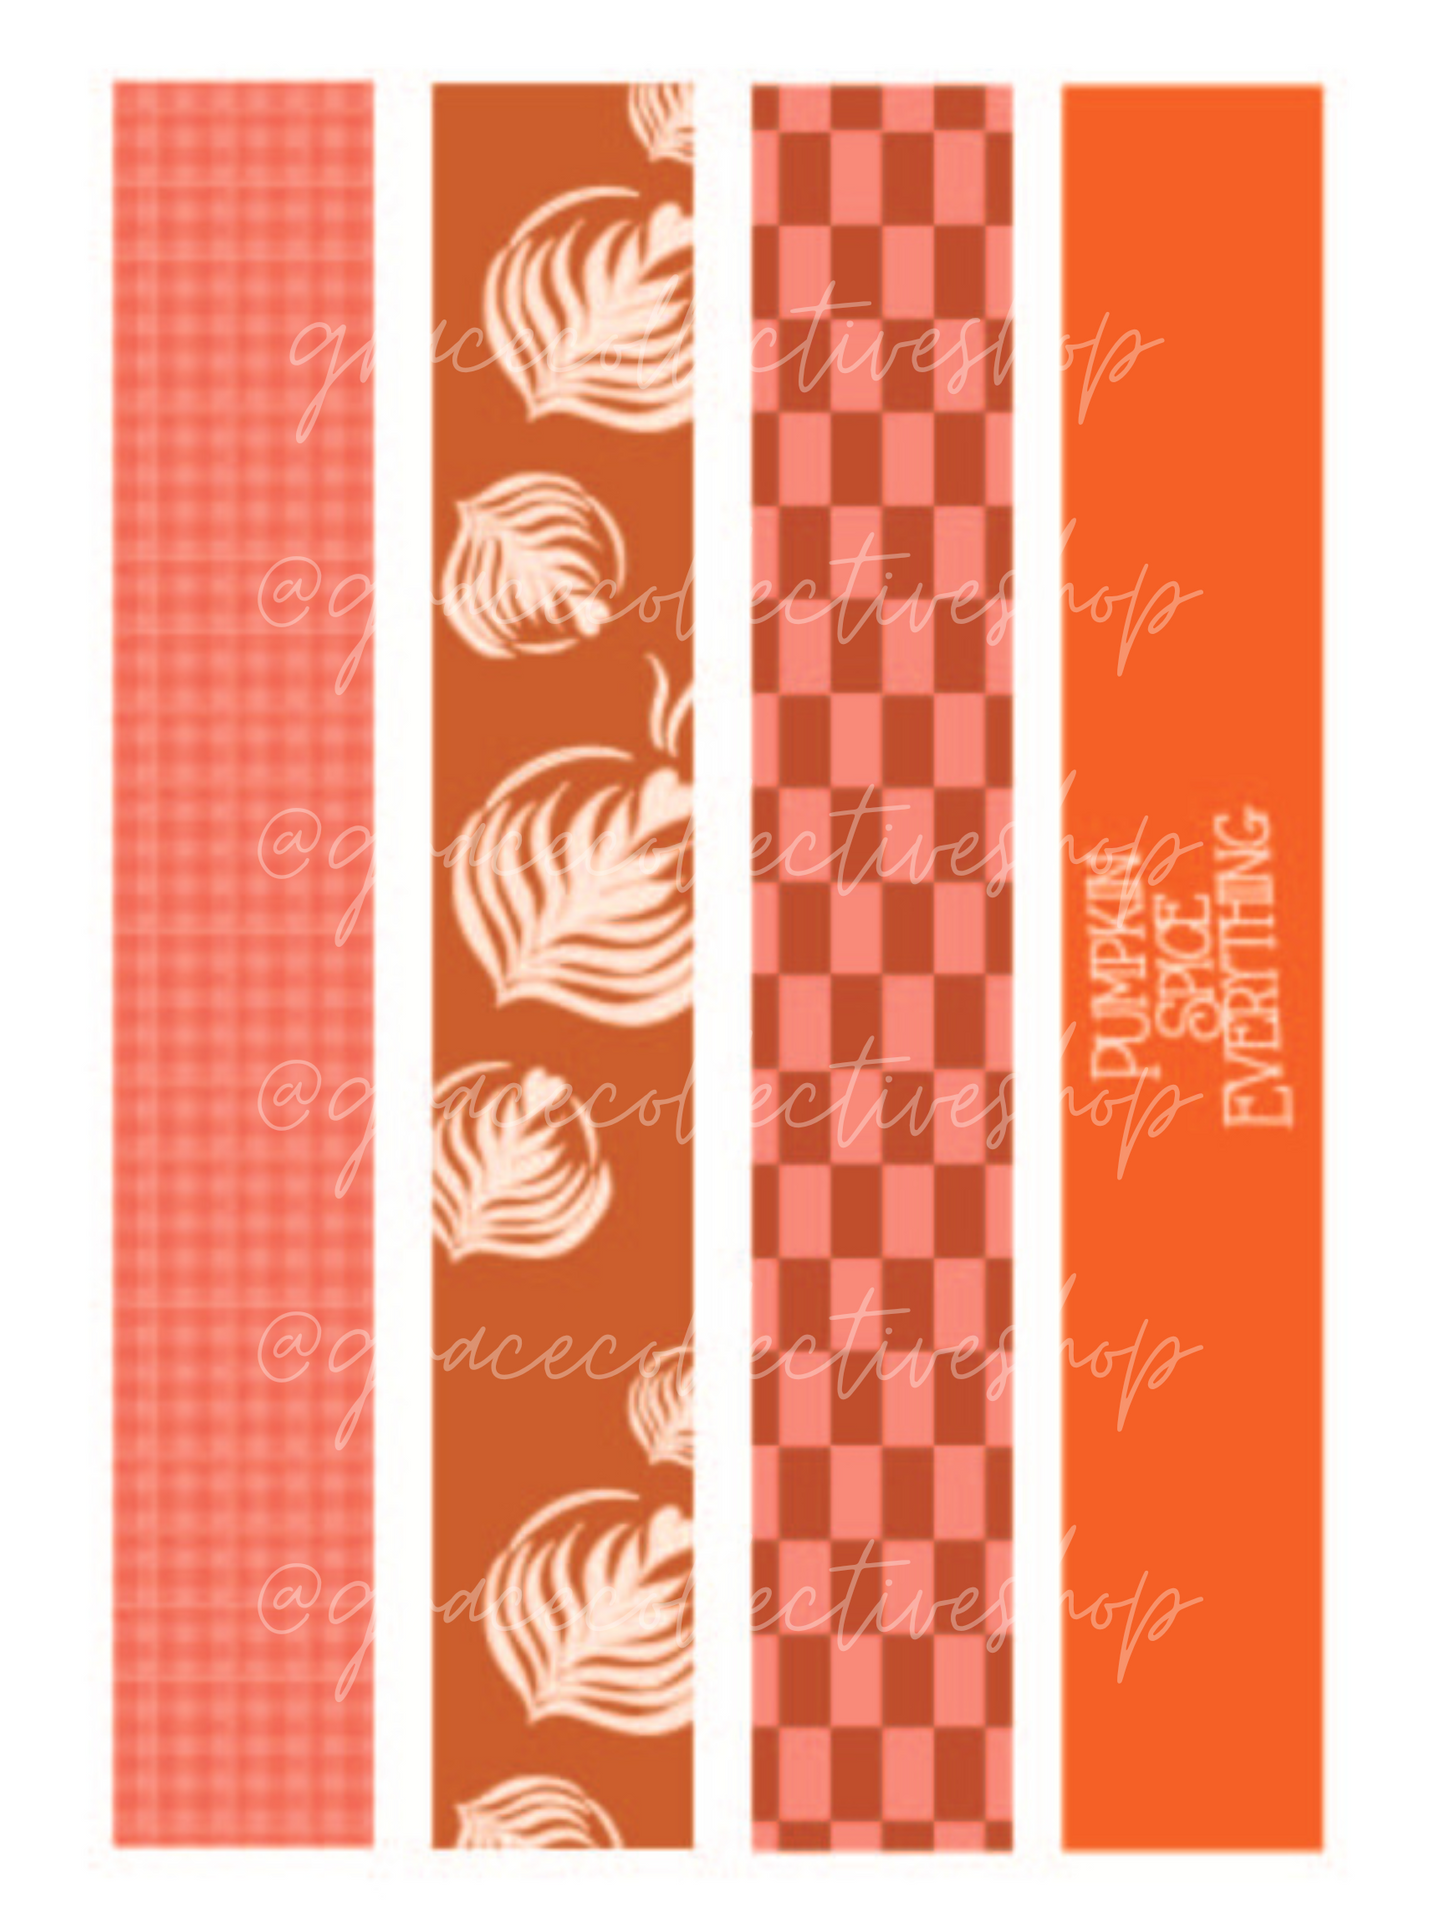 Pumpkin Spice Latte | Printable Collaboration with @jackiegblog